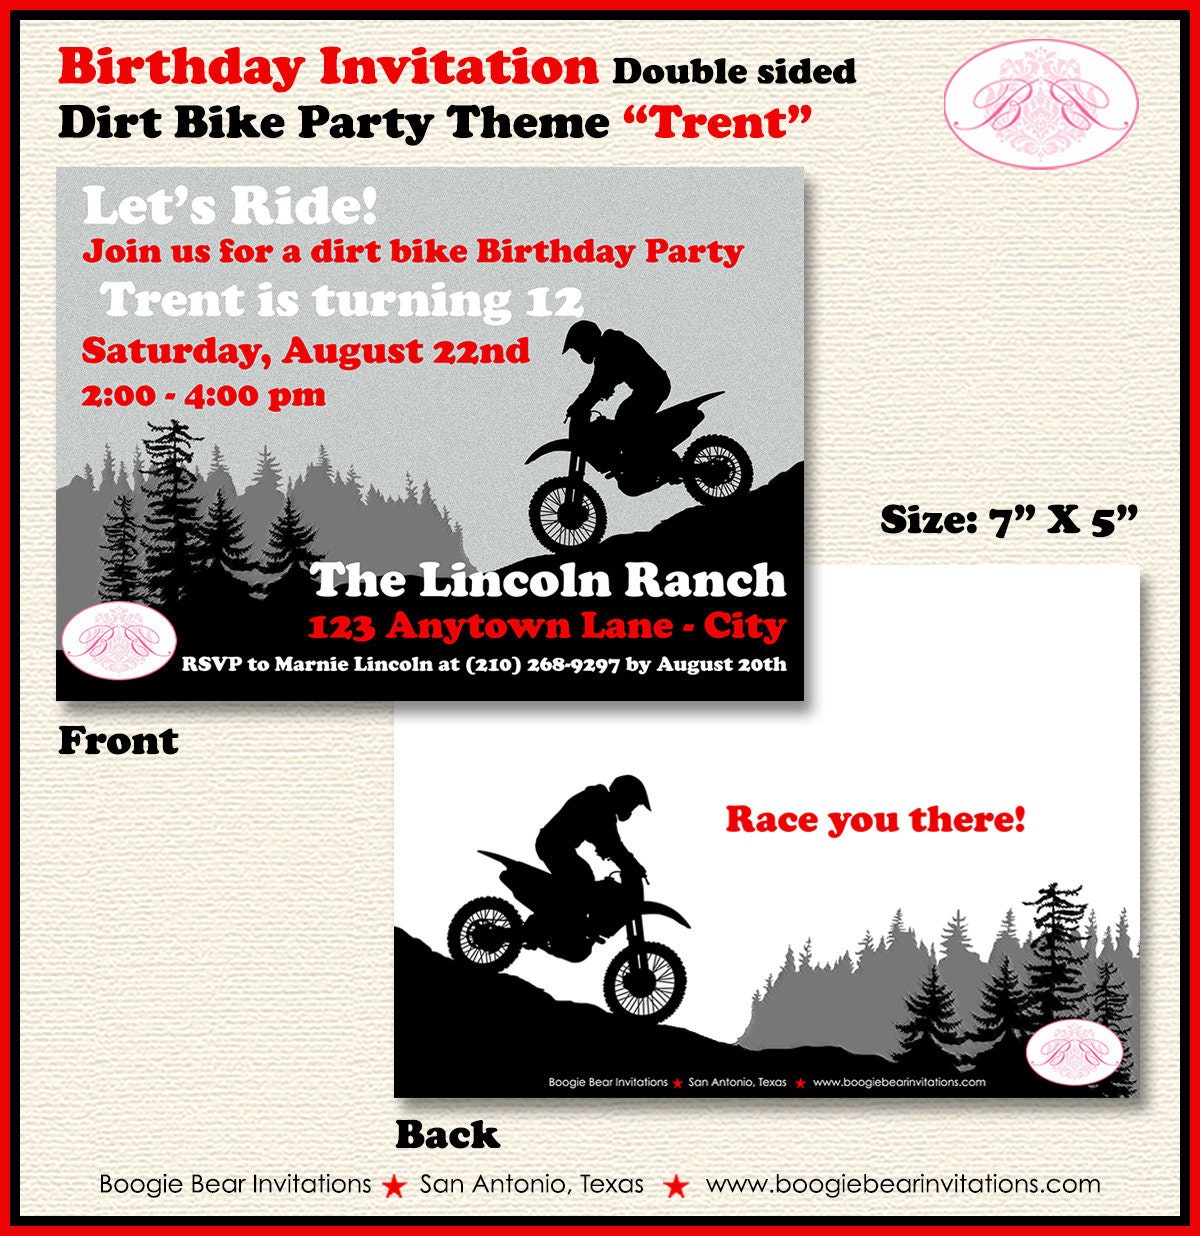 Dirt Bike Birthday Party Invitation Red Black Enduro Motocross Racing Motorcycle Track Girl Boy Boogie Bear Invitations Trent Theme Printed